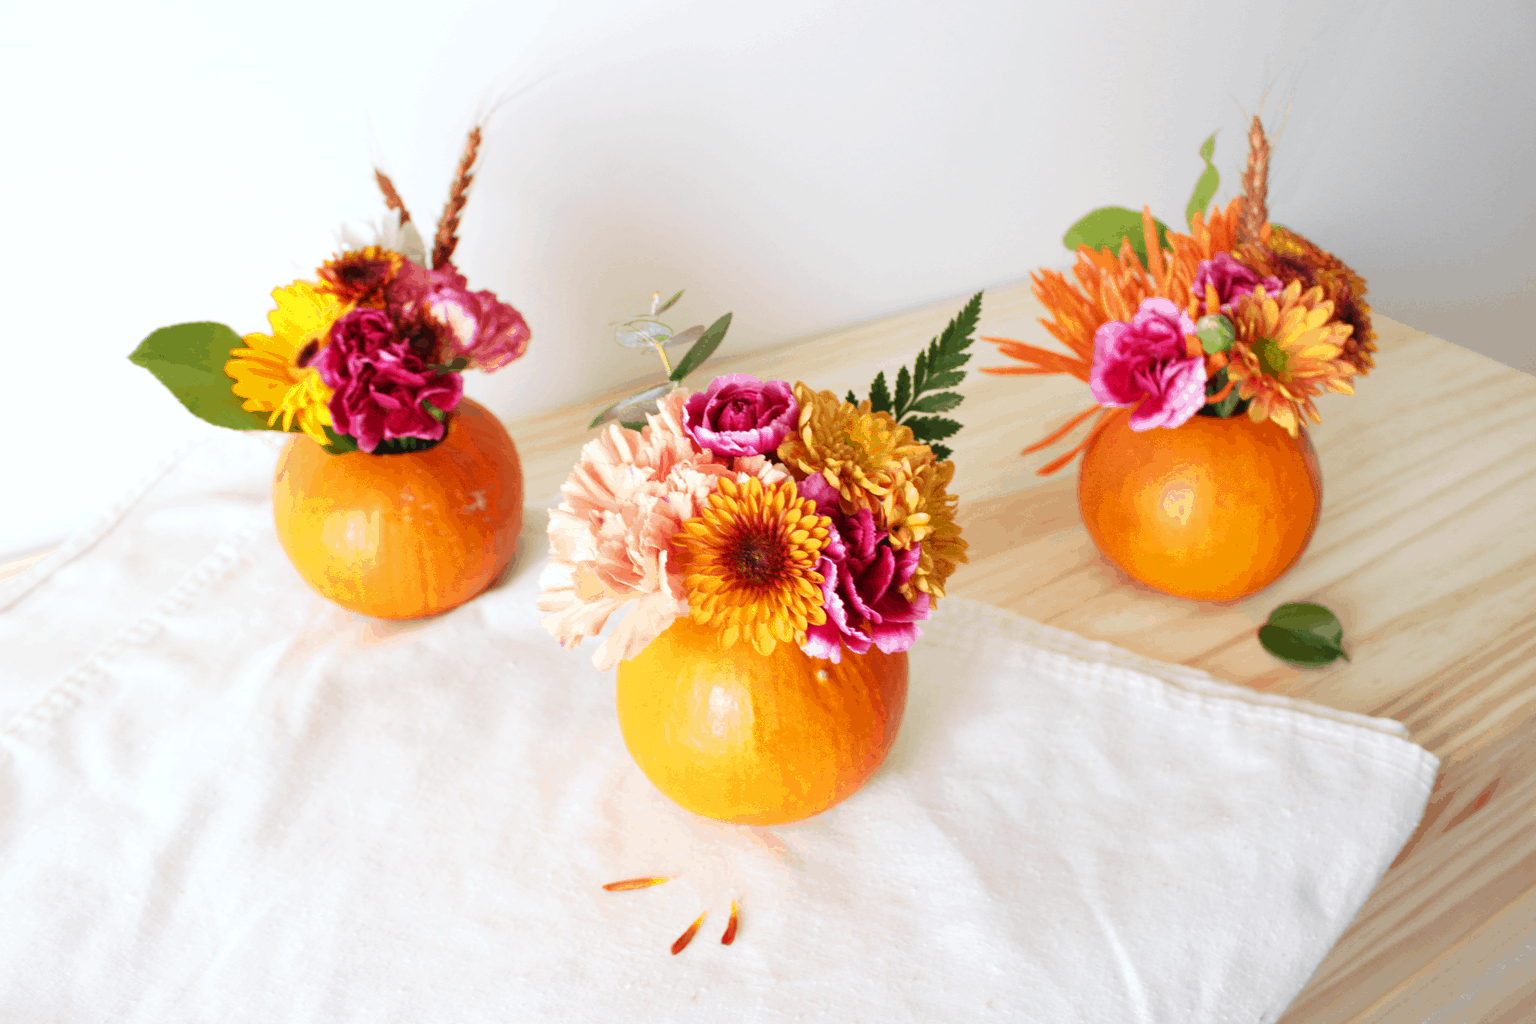  Mini Pumpkin Florals - friendsgiving decor ideas